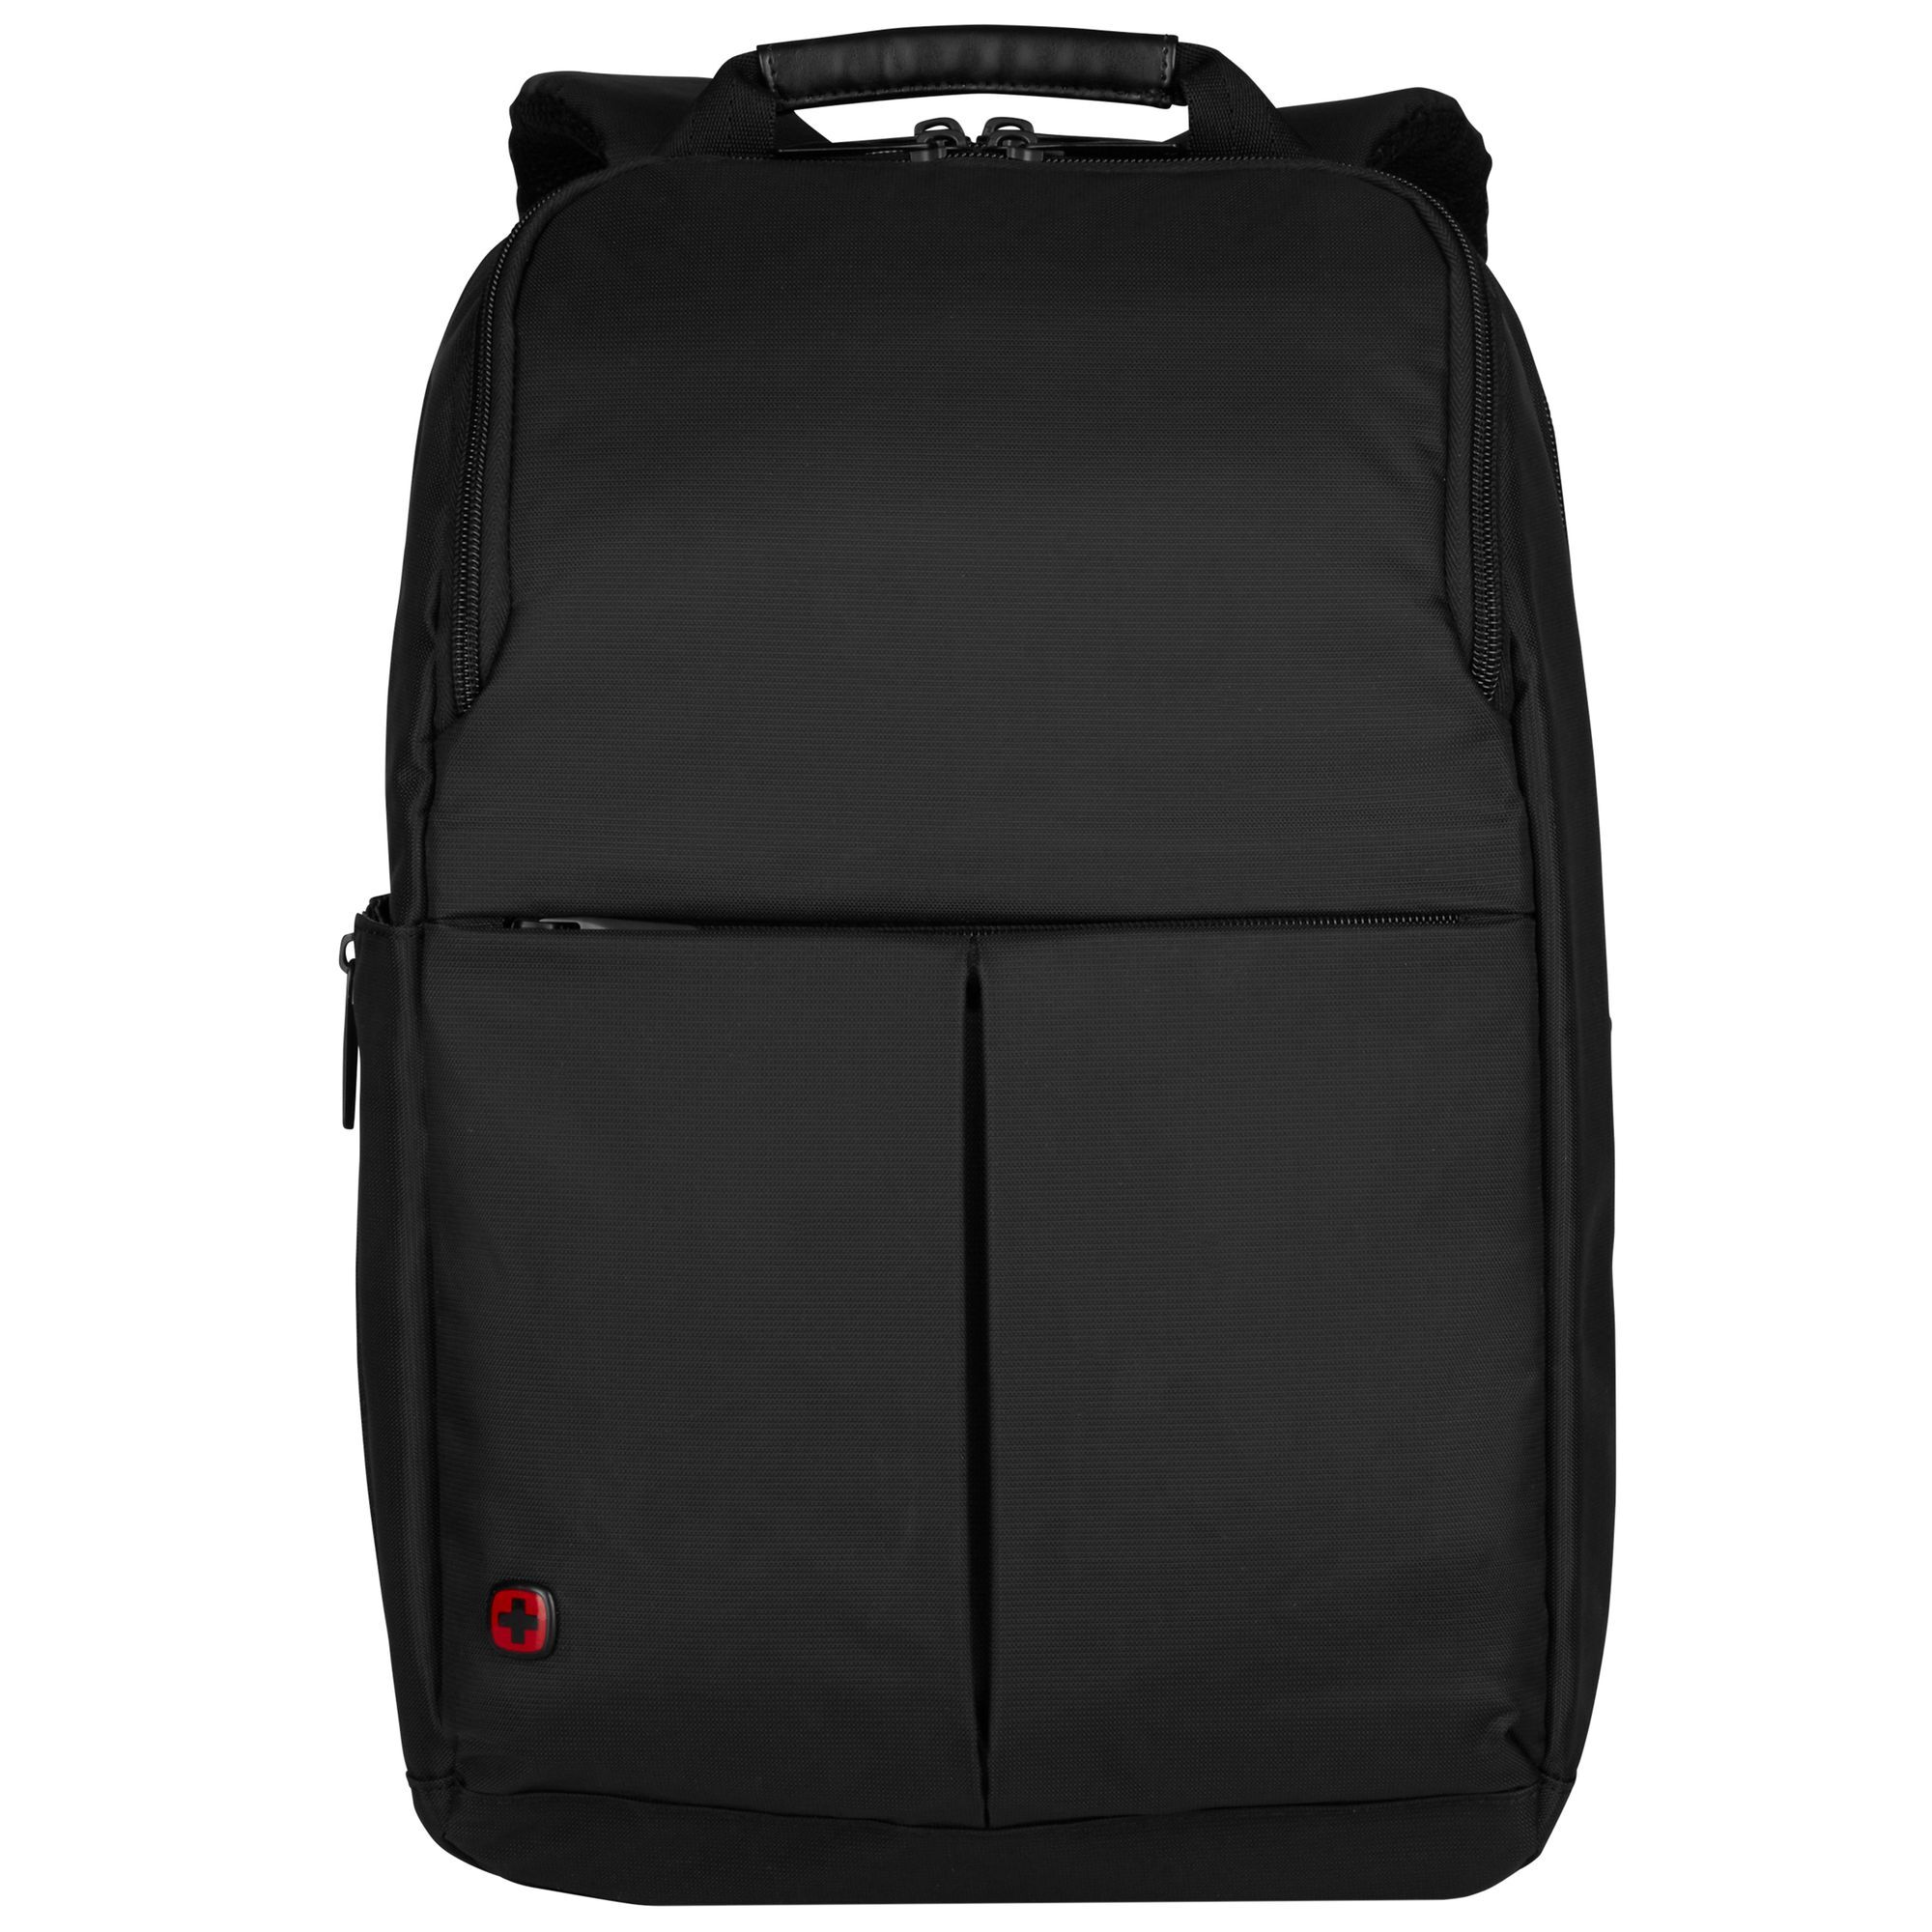 Рюкзак Wenger Reload 14 42 cm Laptopfach, черный рюкзак wenger mx reload 14 42 cm laptopfach цвет heather grey